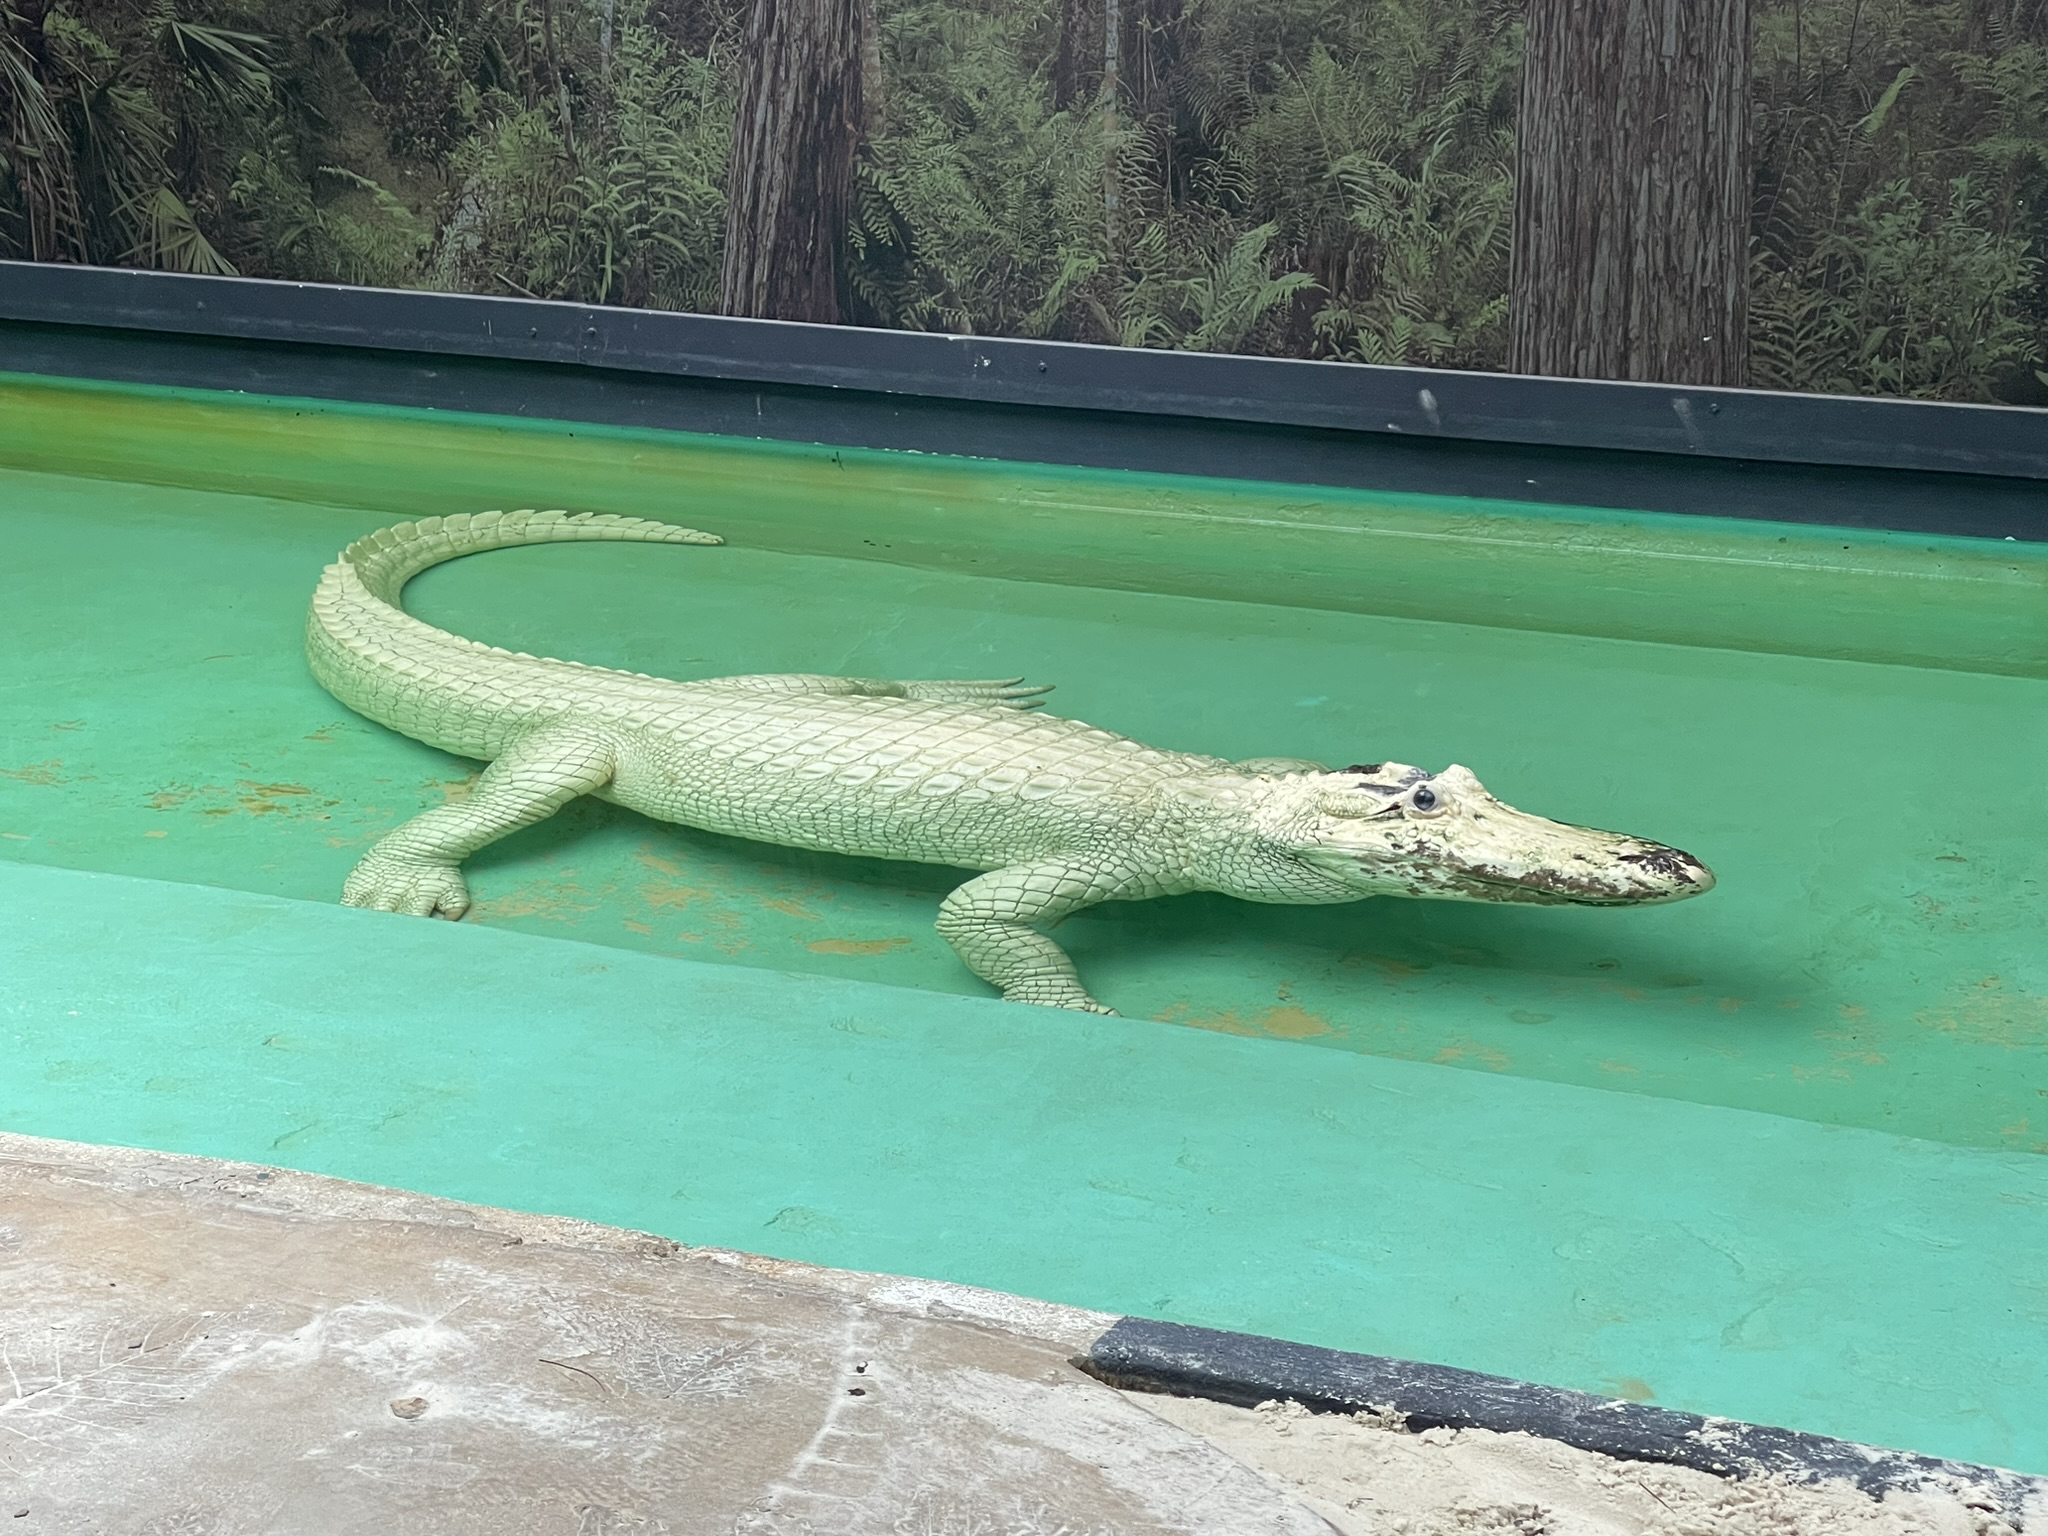 Gatorland’s Pale Predators: Leucistic Alligators